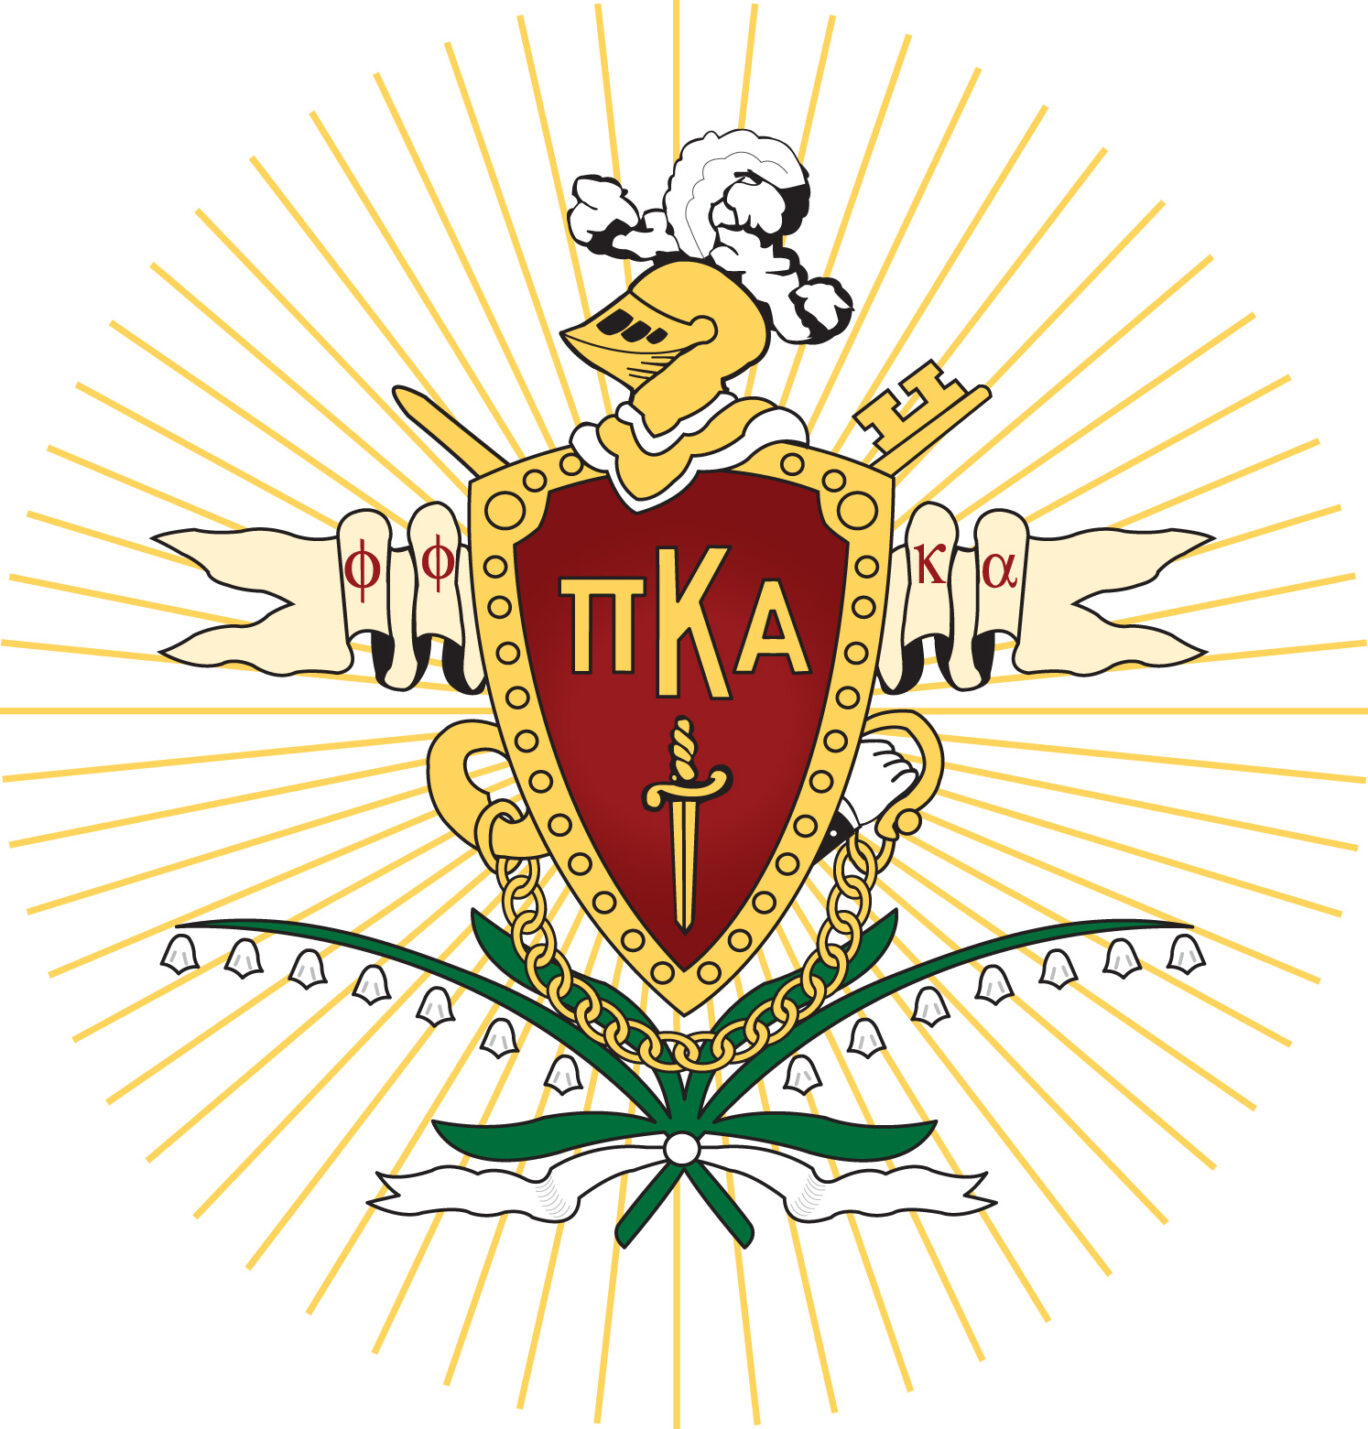 Pi Kappa Alpha Fraternity crest.